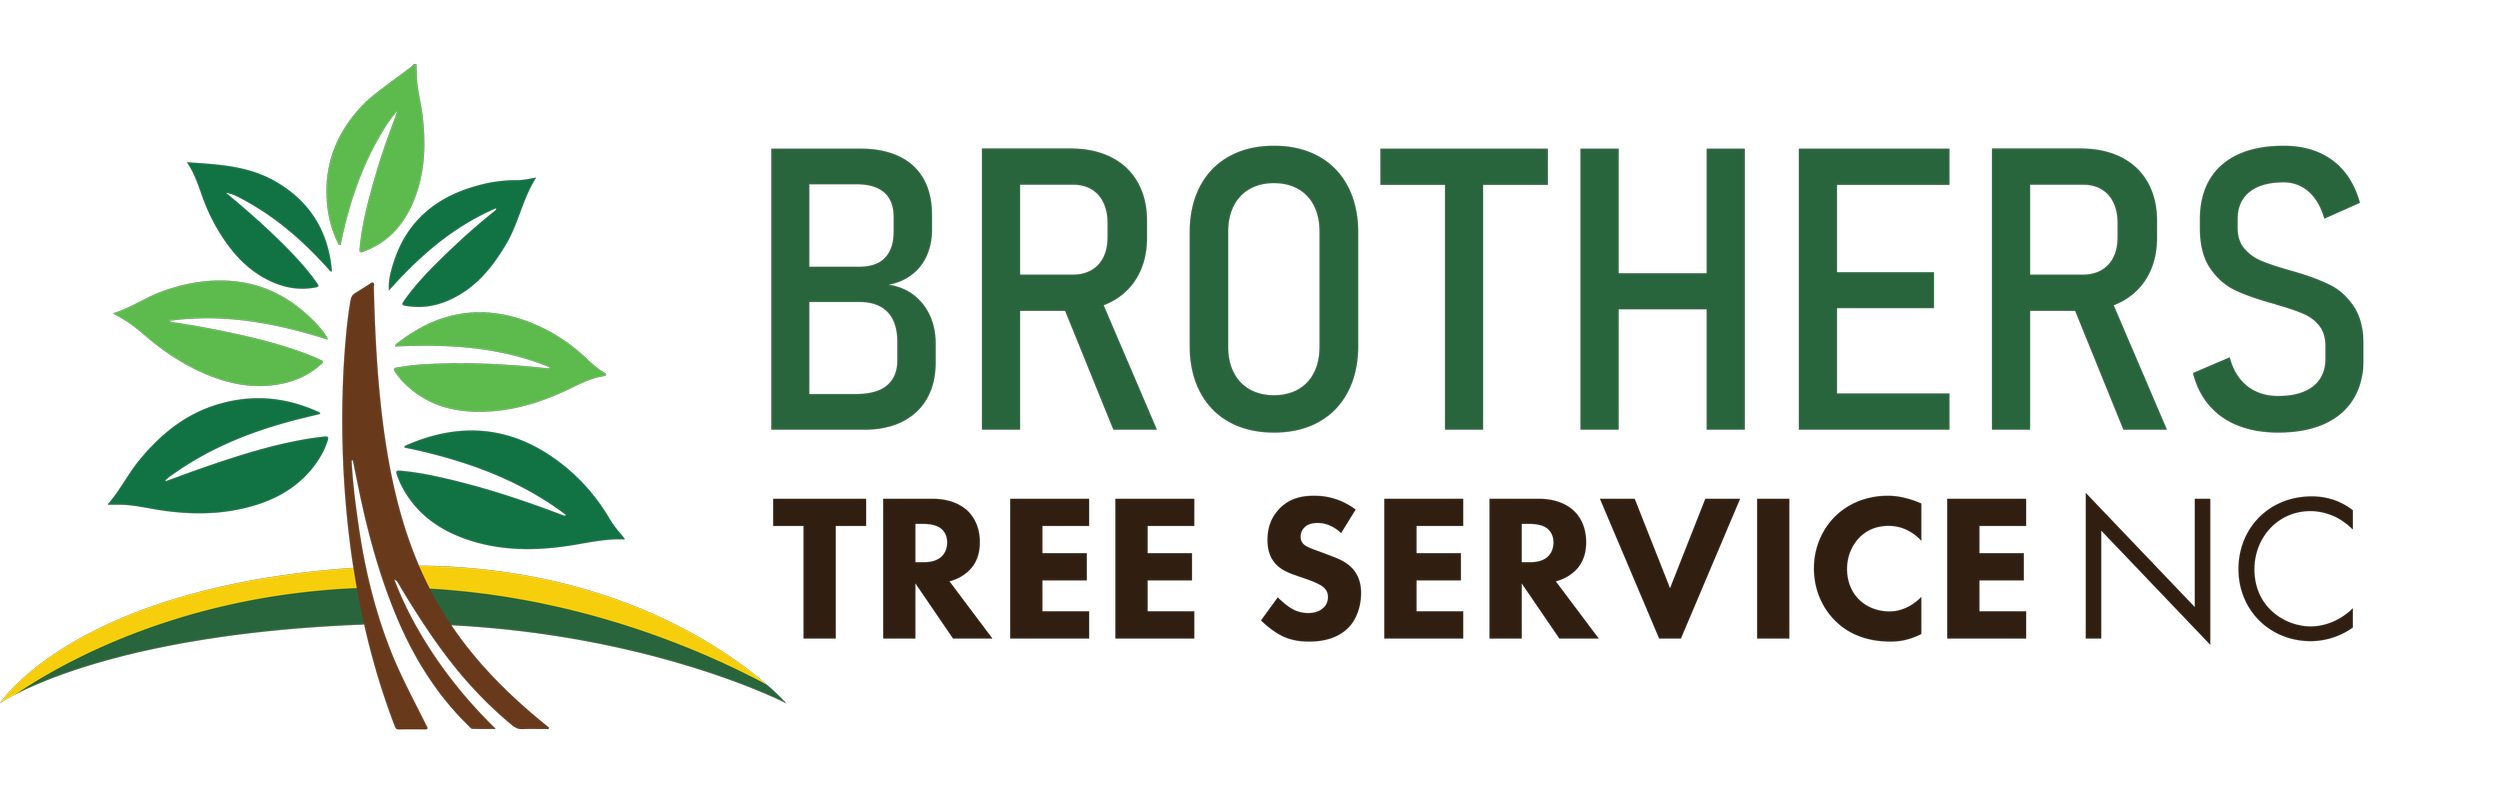 Brothers Tree service Nc